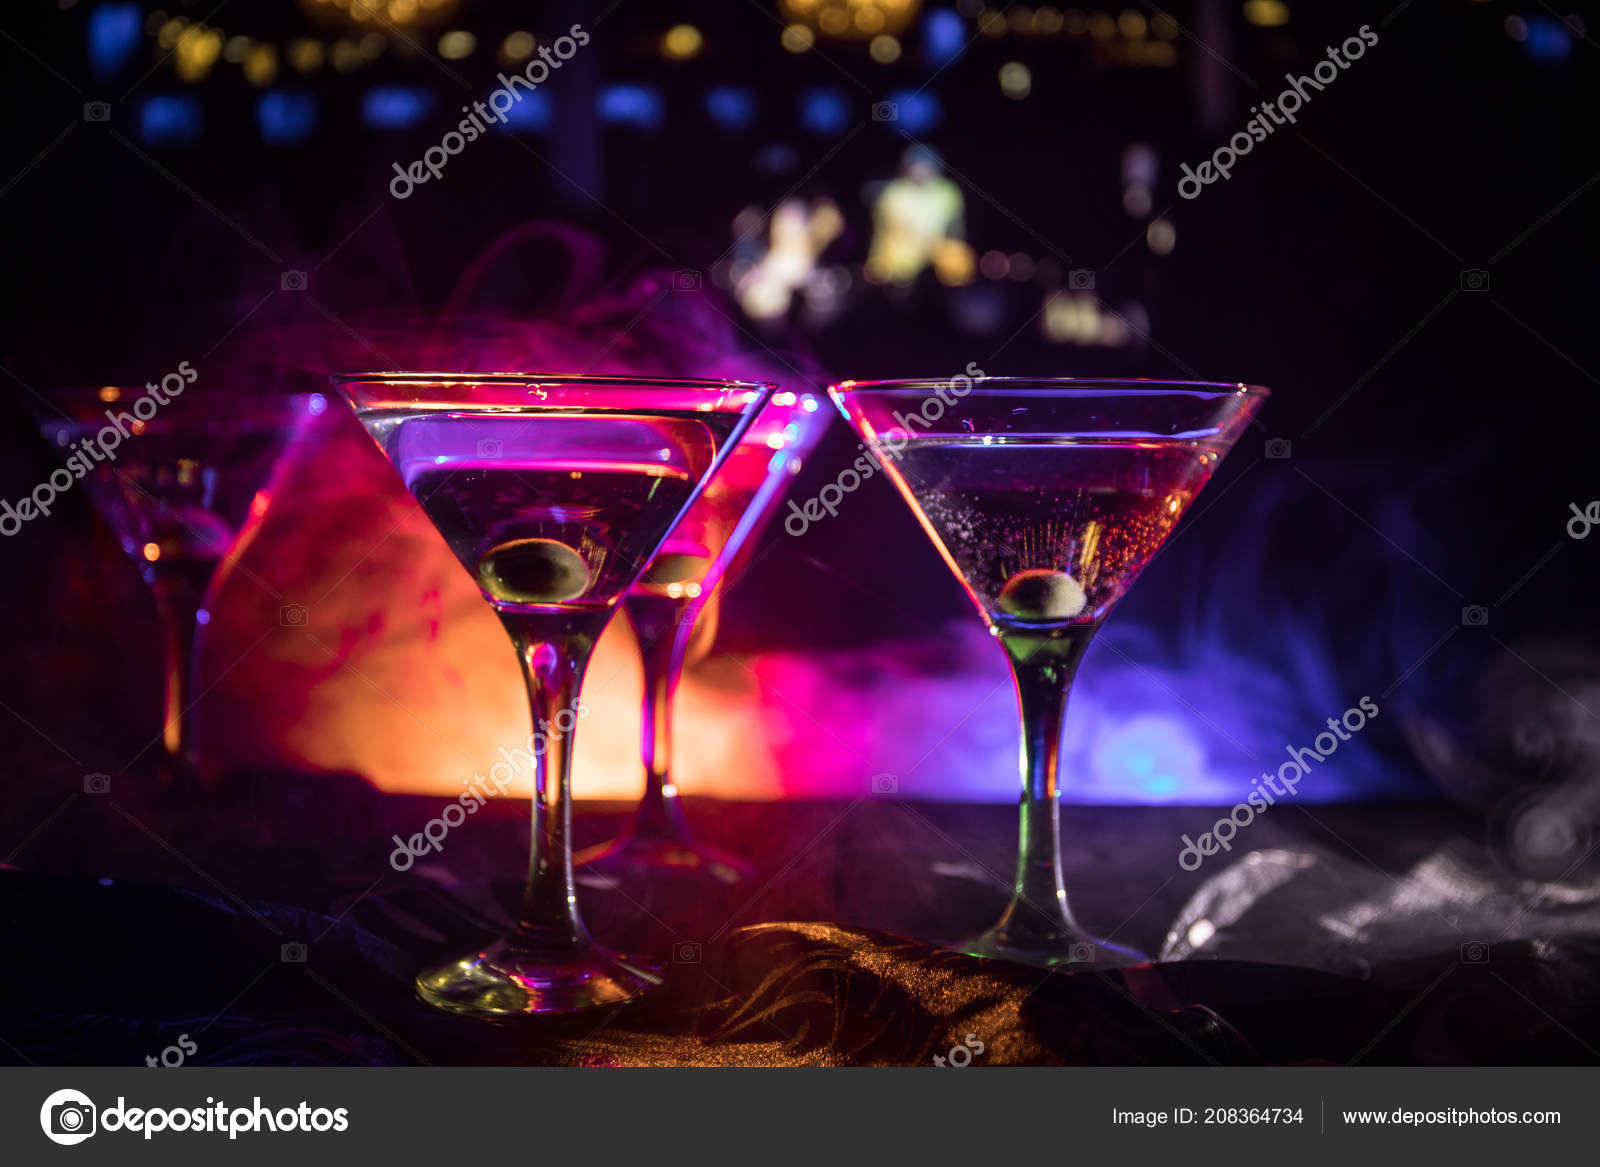 https://st4.depositphotos.com/9904426/20836/i/1600/depositphotos_208364734-stock-photo-several-glasses-famous-cocktail-martini.jpg